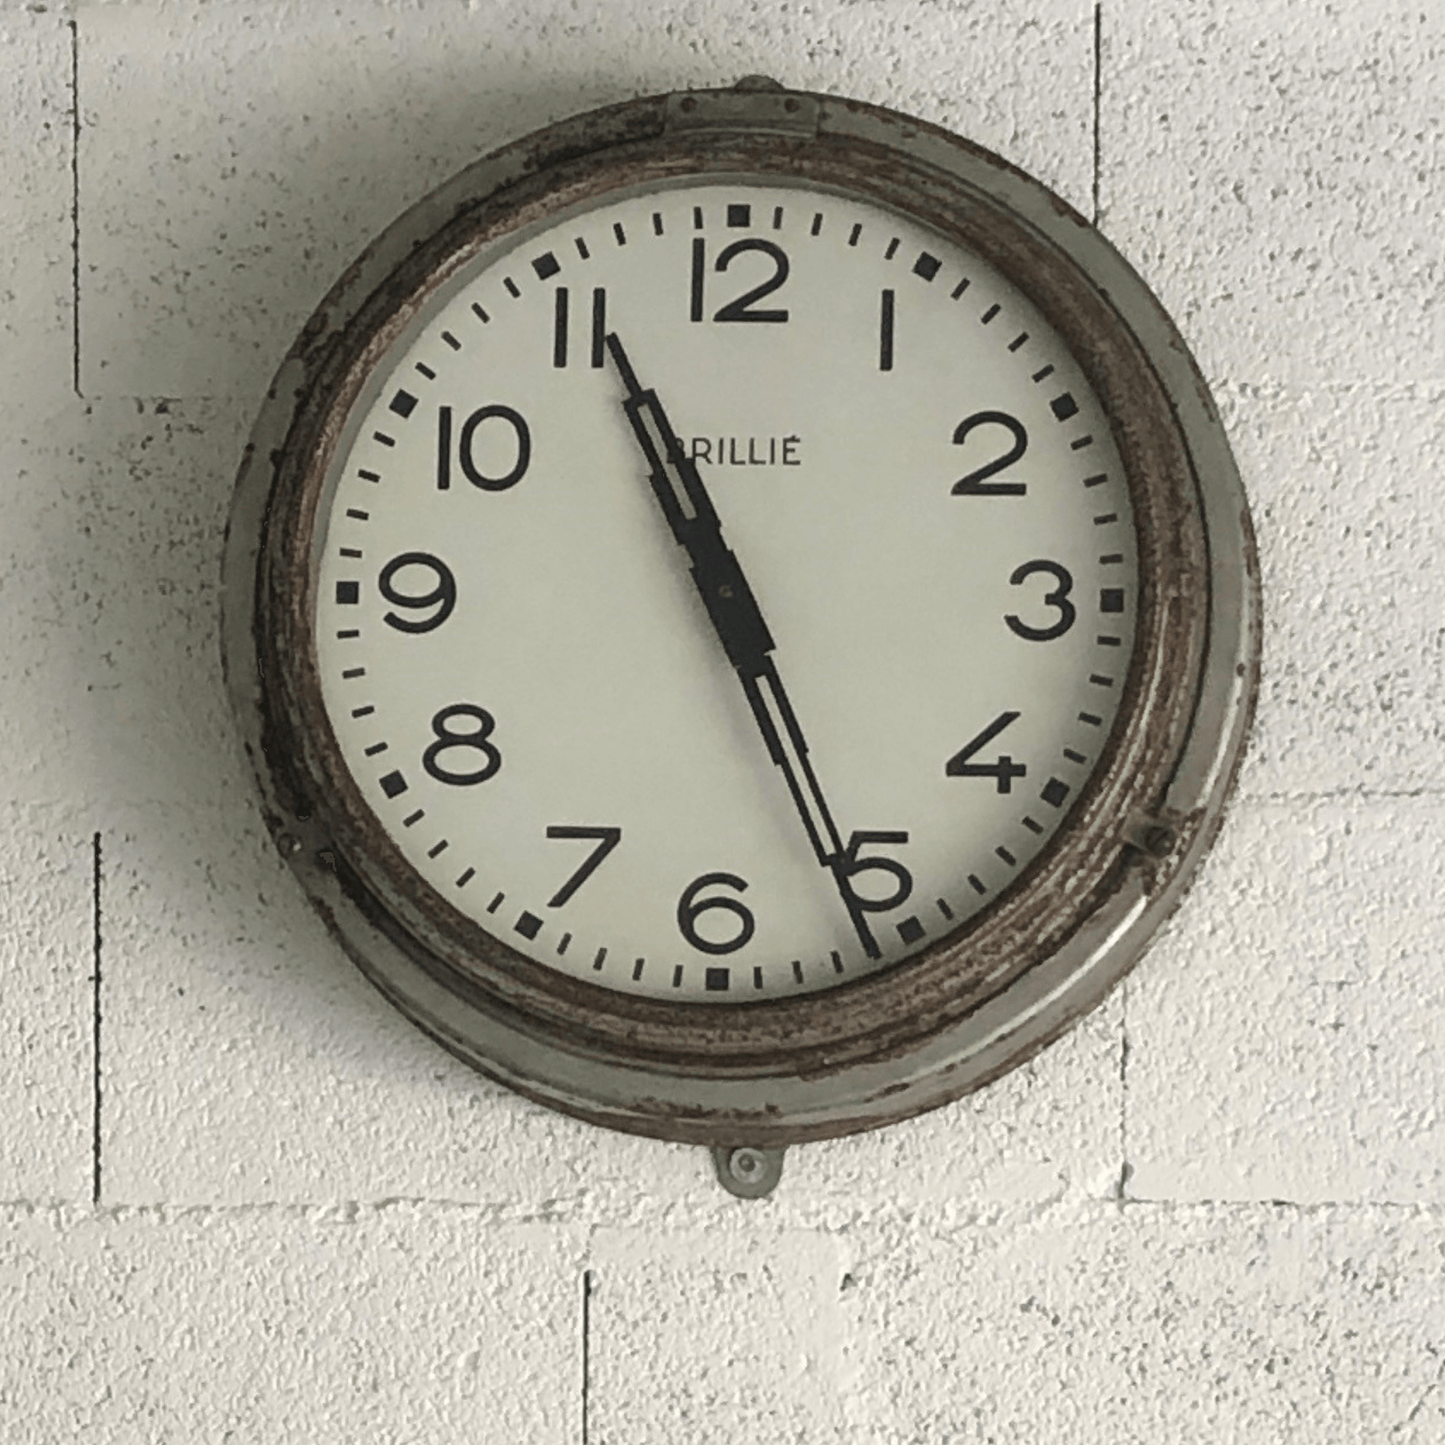 Brillie station clock